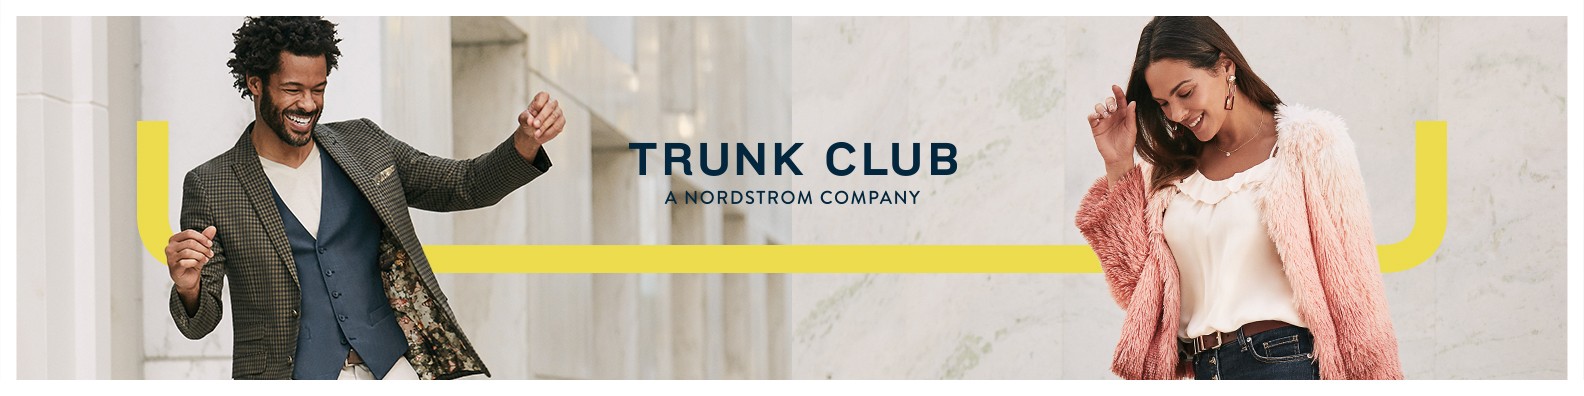 Trunk Club | LinkedIn